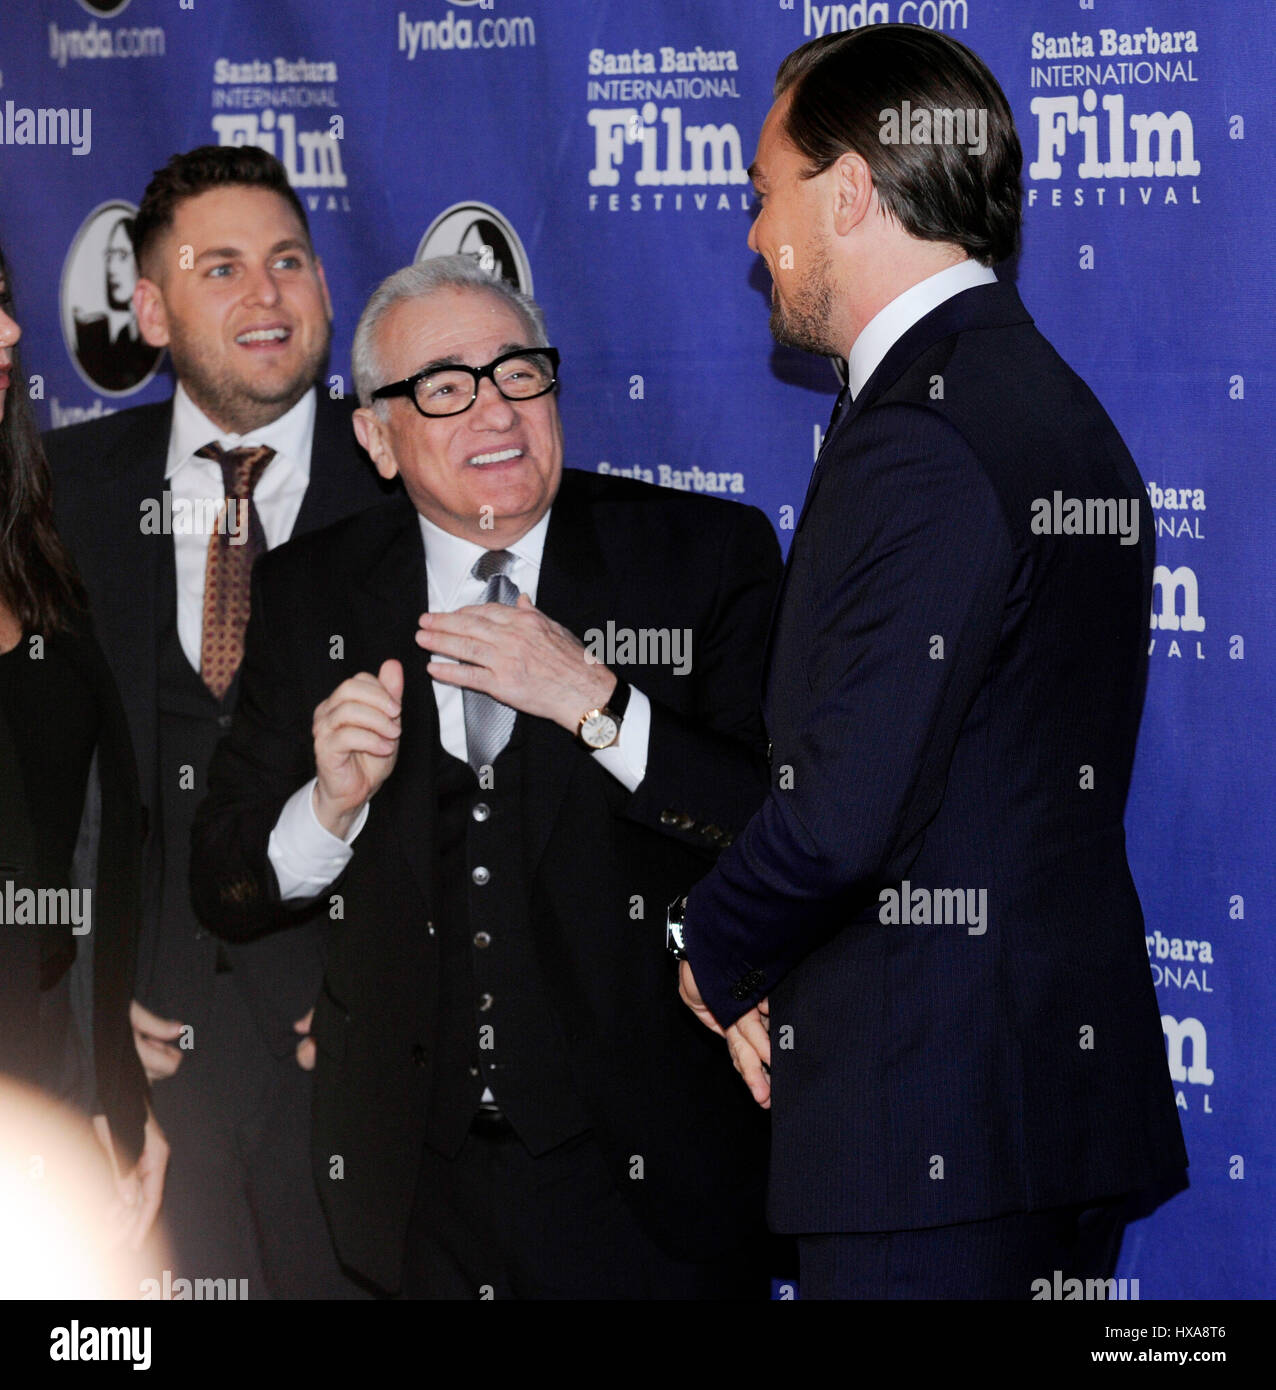 (L-R) Jonah Hill, Martin Scorsese and Leonardo DiCaprio attends the 29th Santa Barbara International Film Festival Cinema Vanguard Award at the Arlington Theatre on February 6, 2014 in Santa Barbara, California. Stock Photo